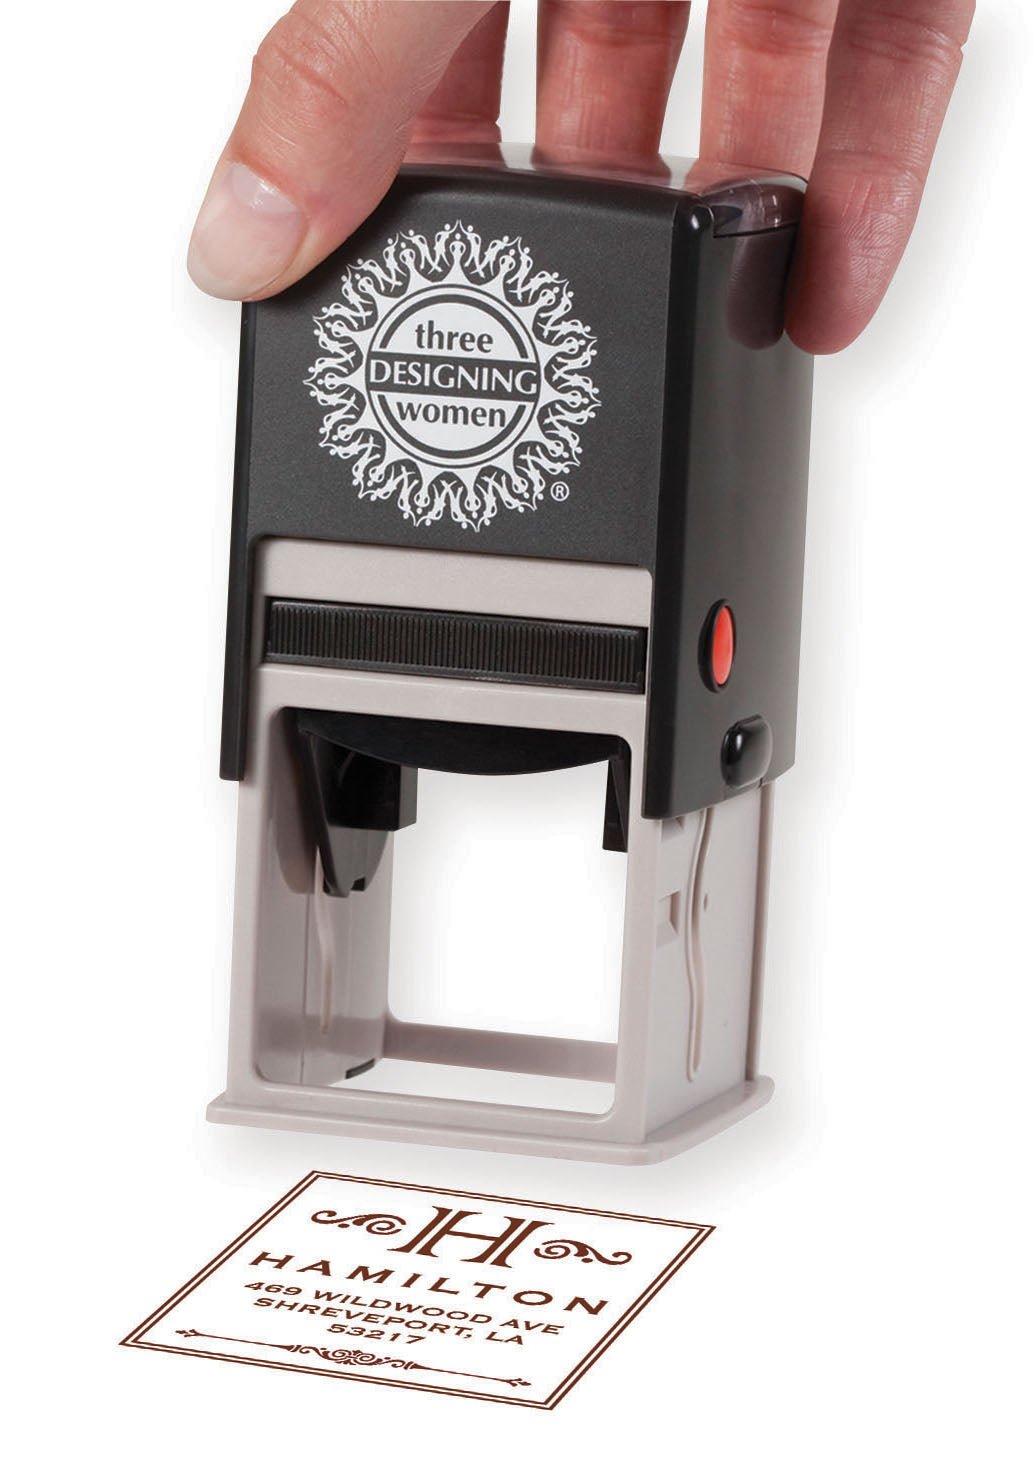 Stamper Device with Black Ink Cartridge Three Designing Women